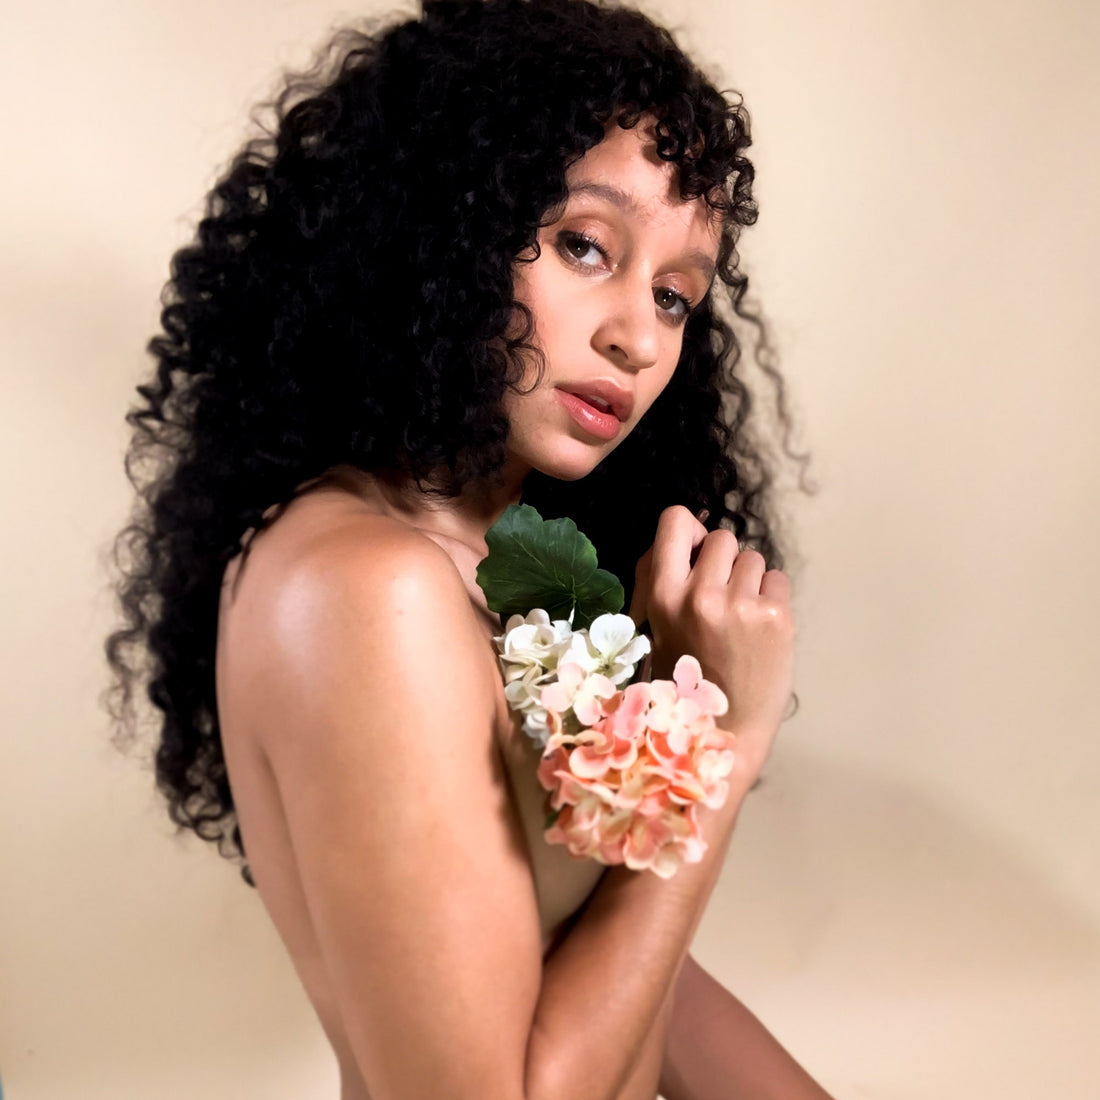 Sex & Salve - Autumn Morris Topless Holding Flowers